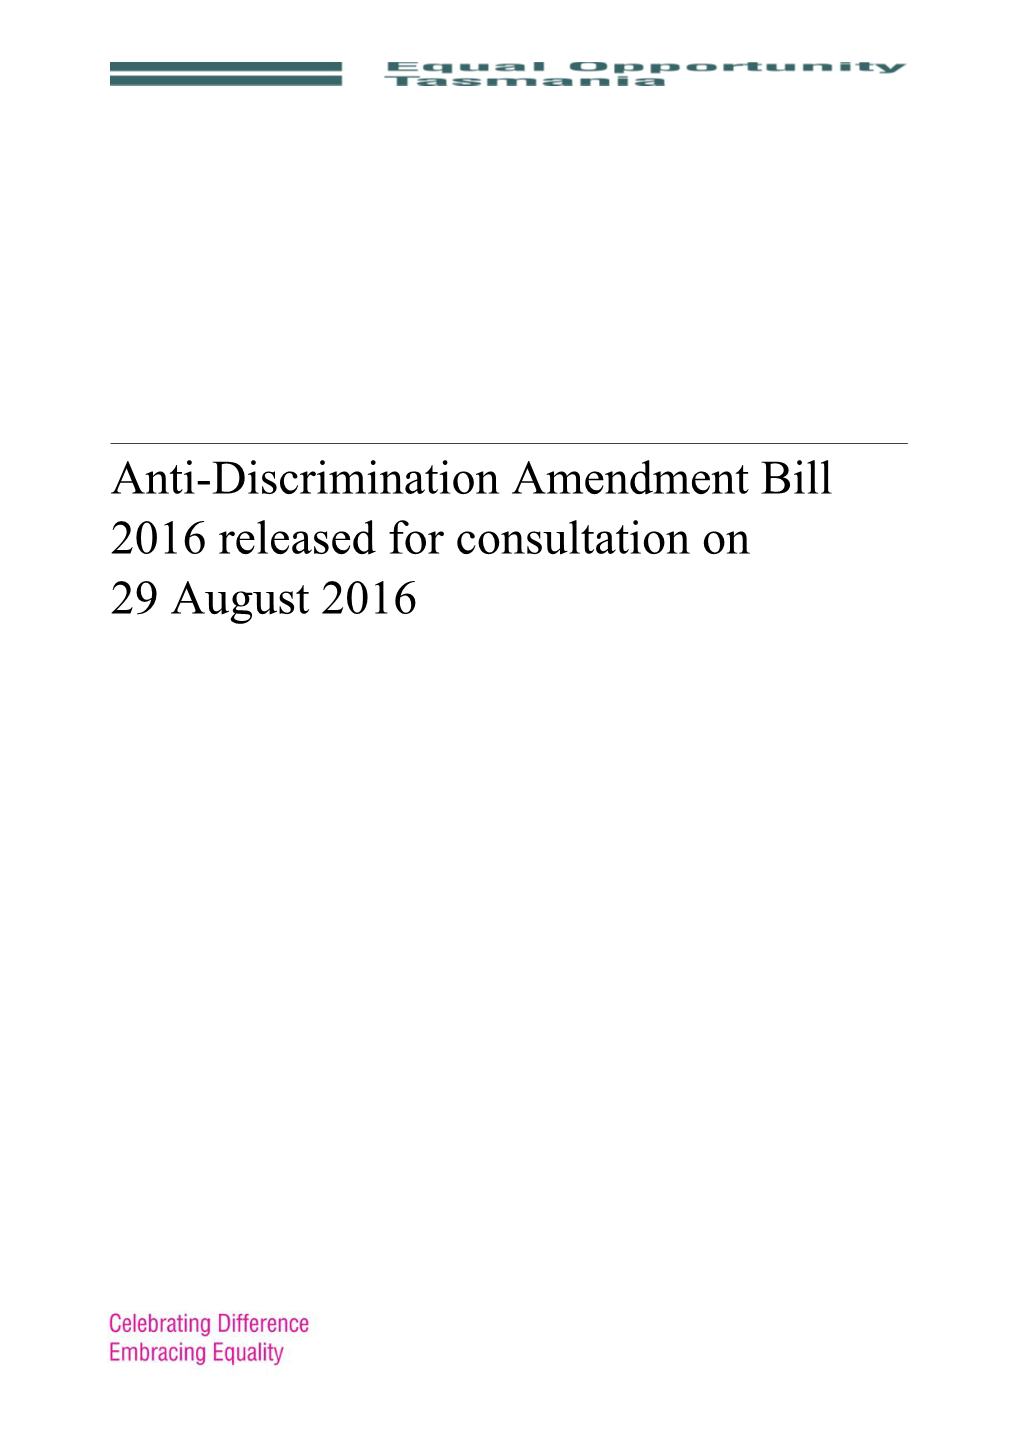 Anti-Discrimination Amendment Bill 2016 Released for Consultation on 29August 2016